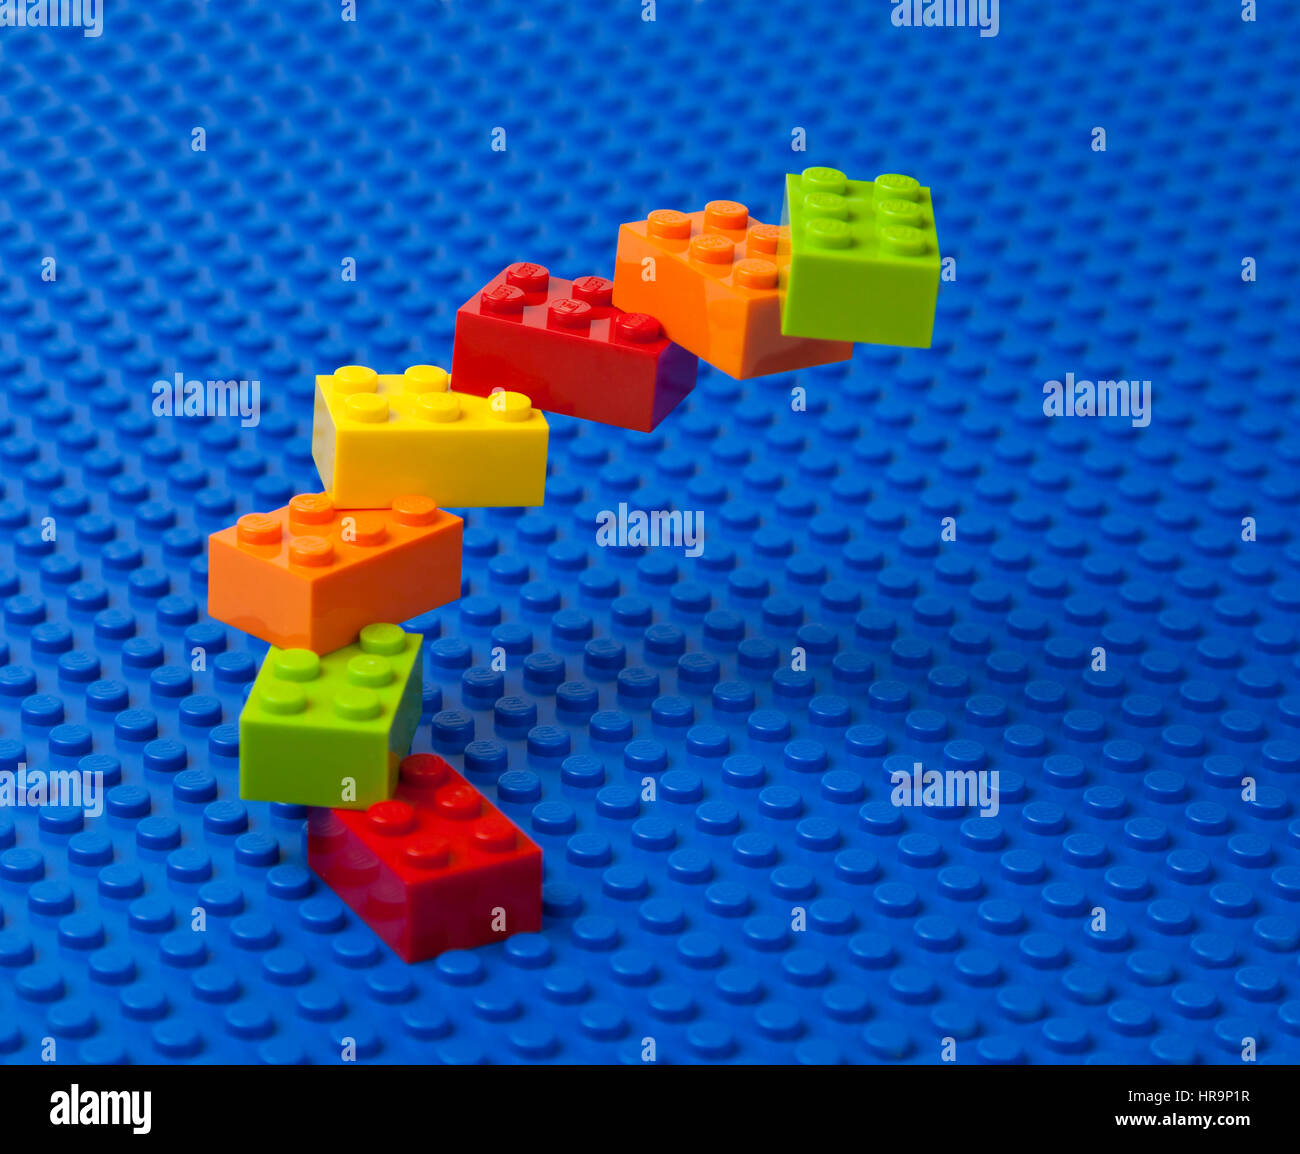 Upward spiral construction or staircase of interlocking Lego ...